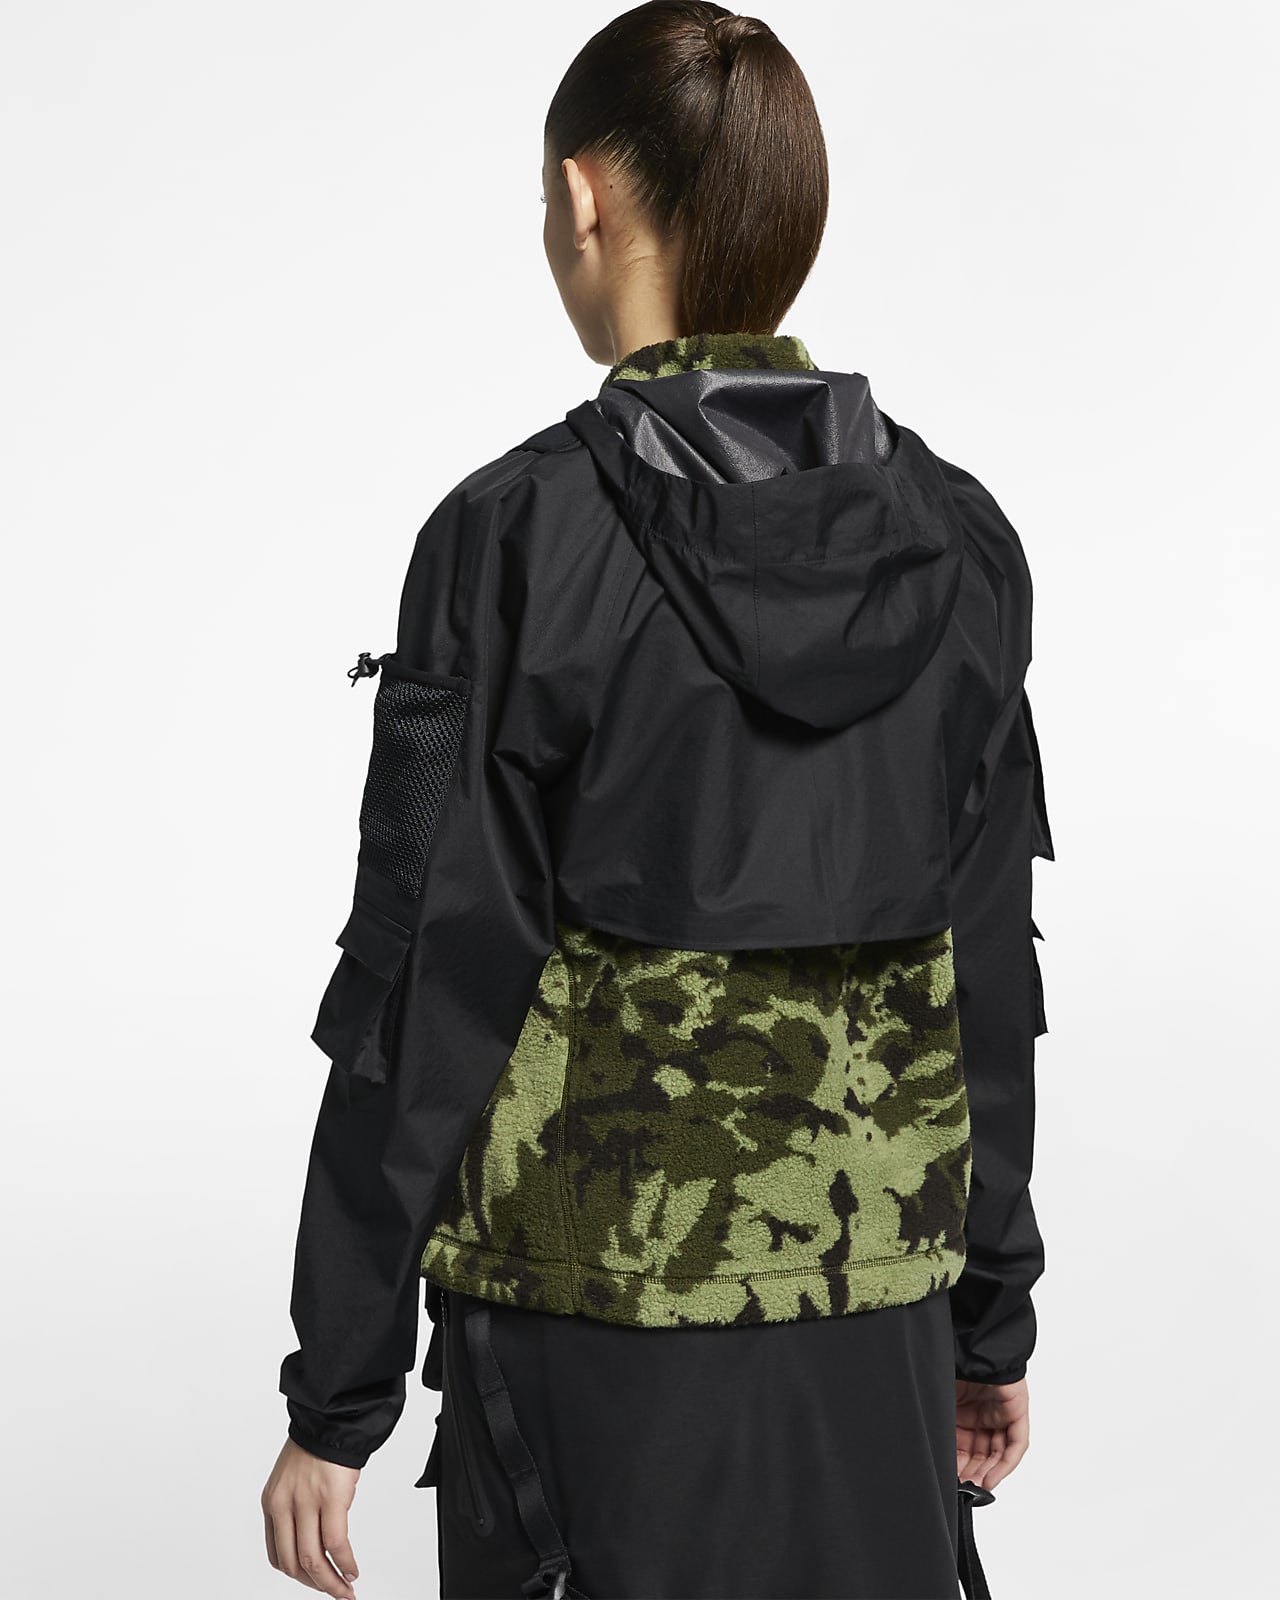 Nike x MMW Women’s Hooded Jacket